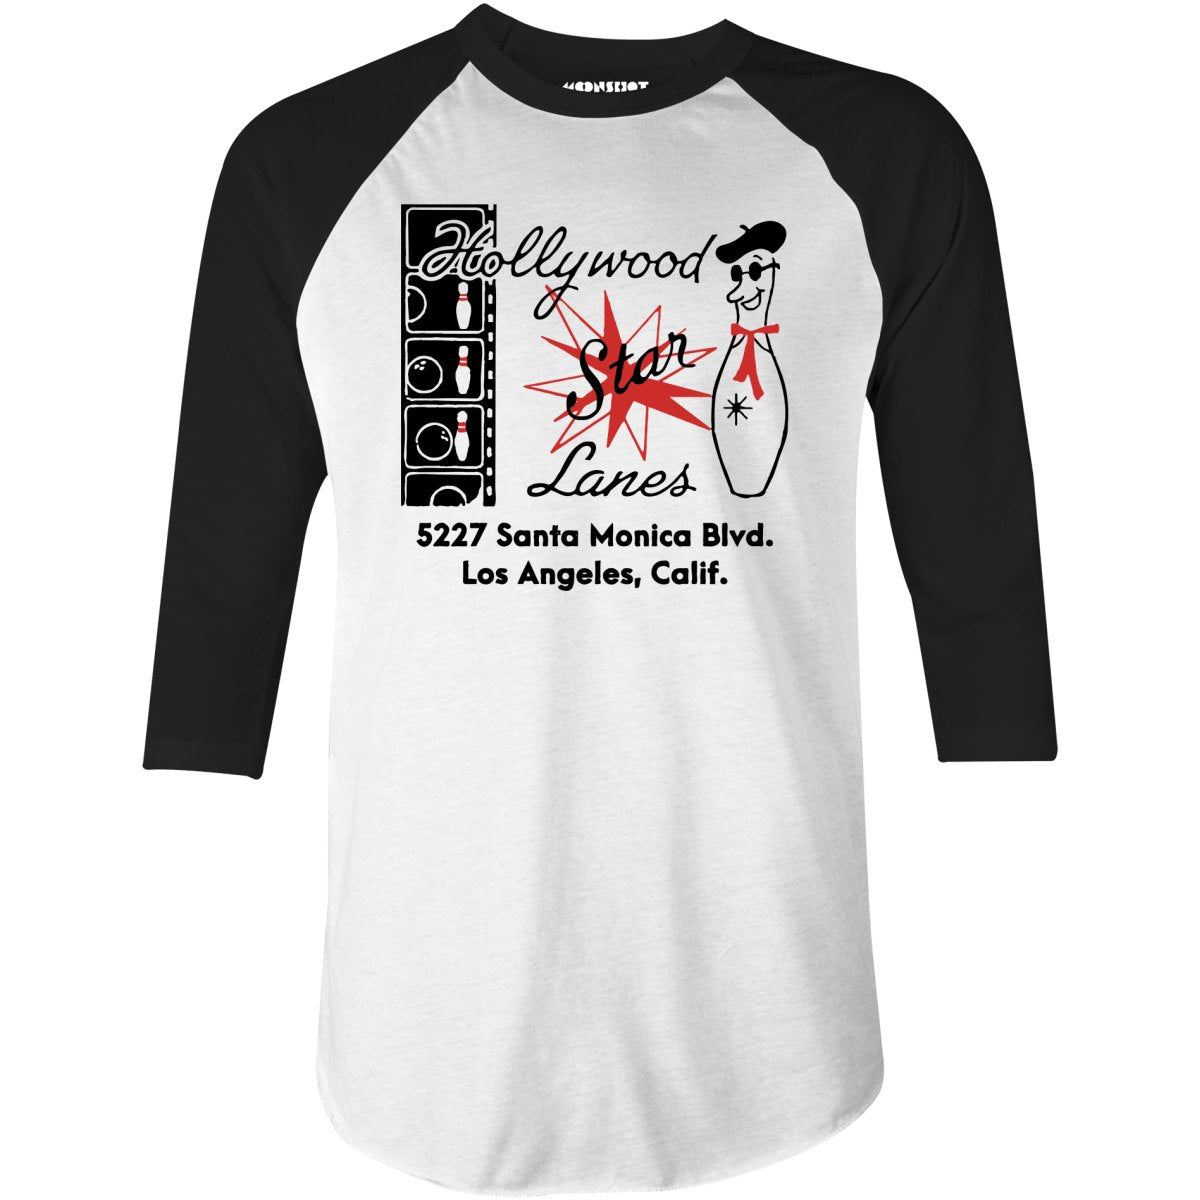 Hollywood Star Lanes - Los Angeles, CA - Vintage Bowling Alley - 3/4 Sleeve Raglan T-Shirt